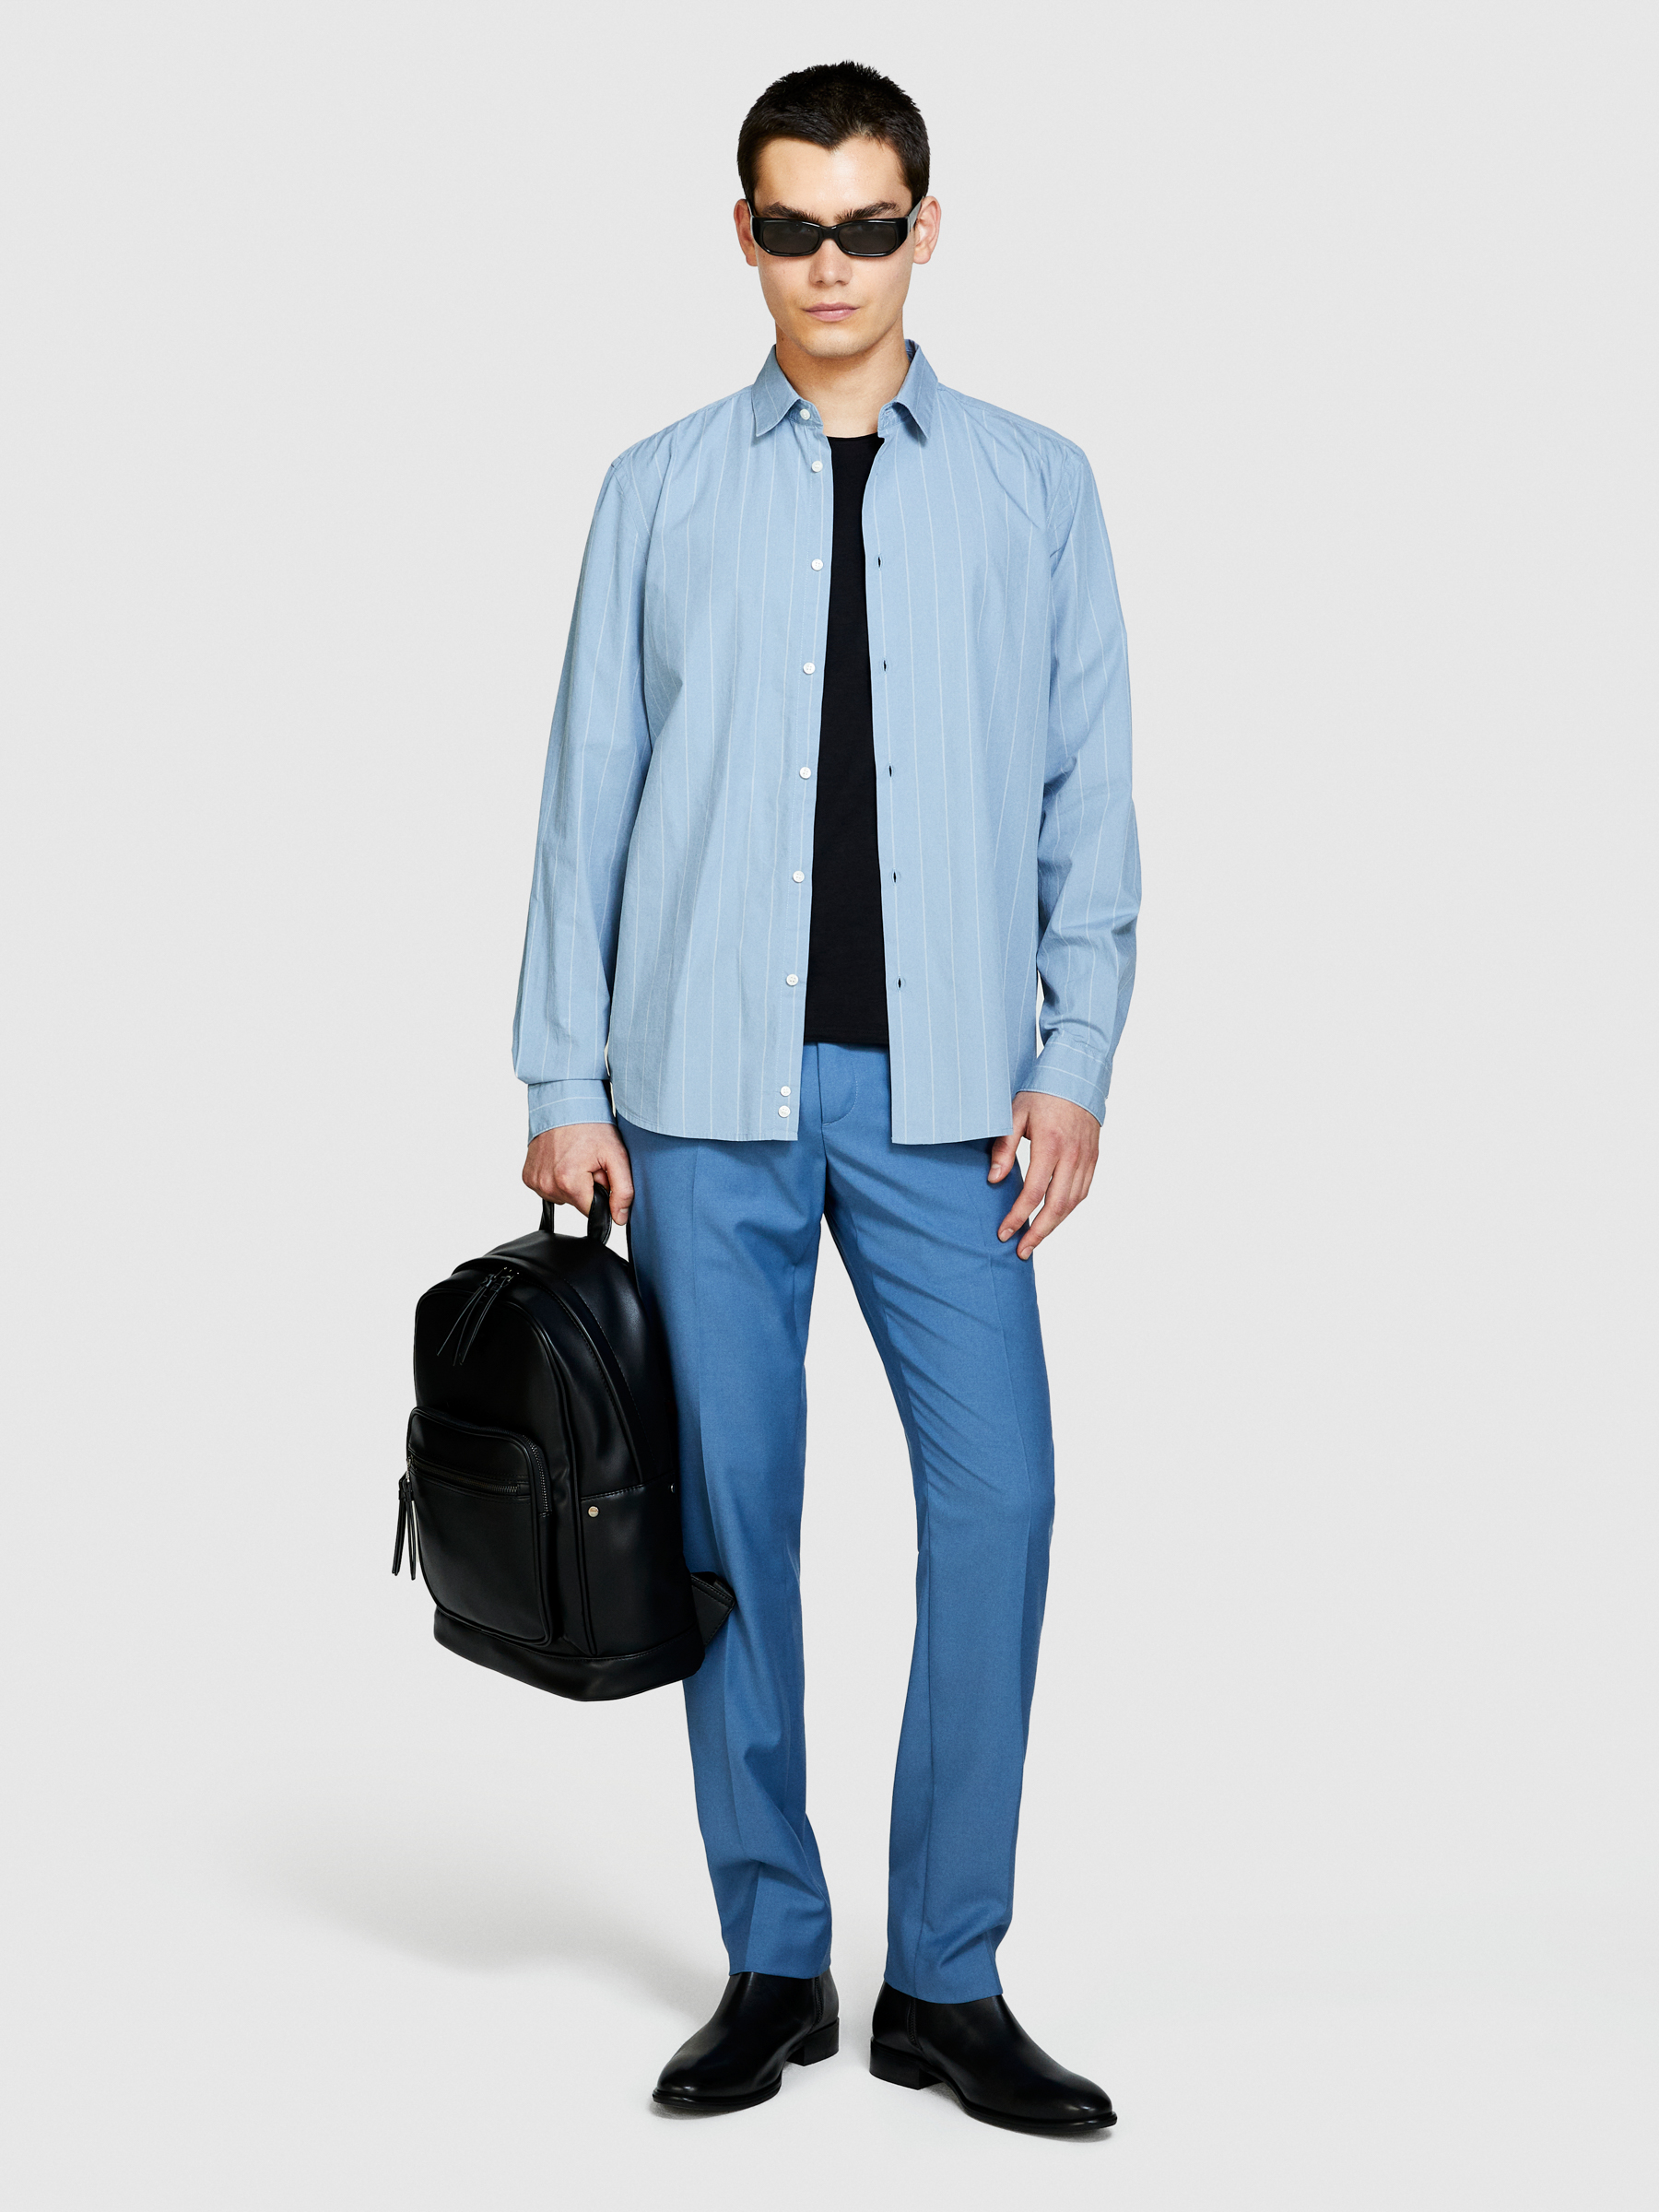 Sisley - Striped Shirt, Man, Light Blue, Size: 45